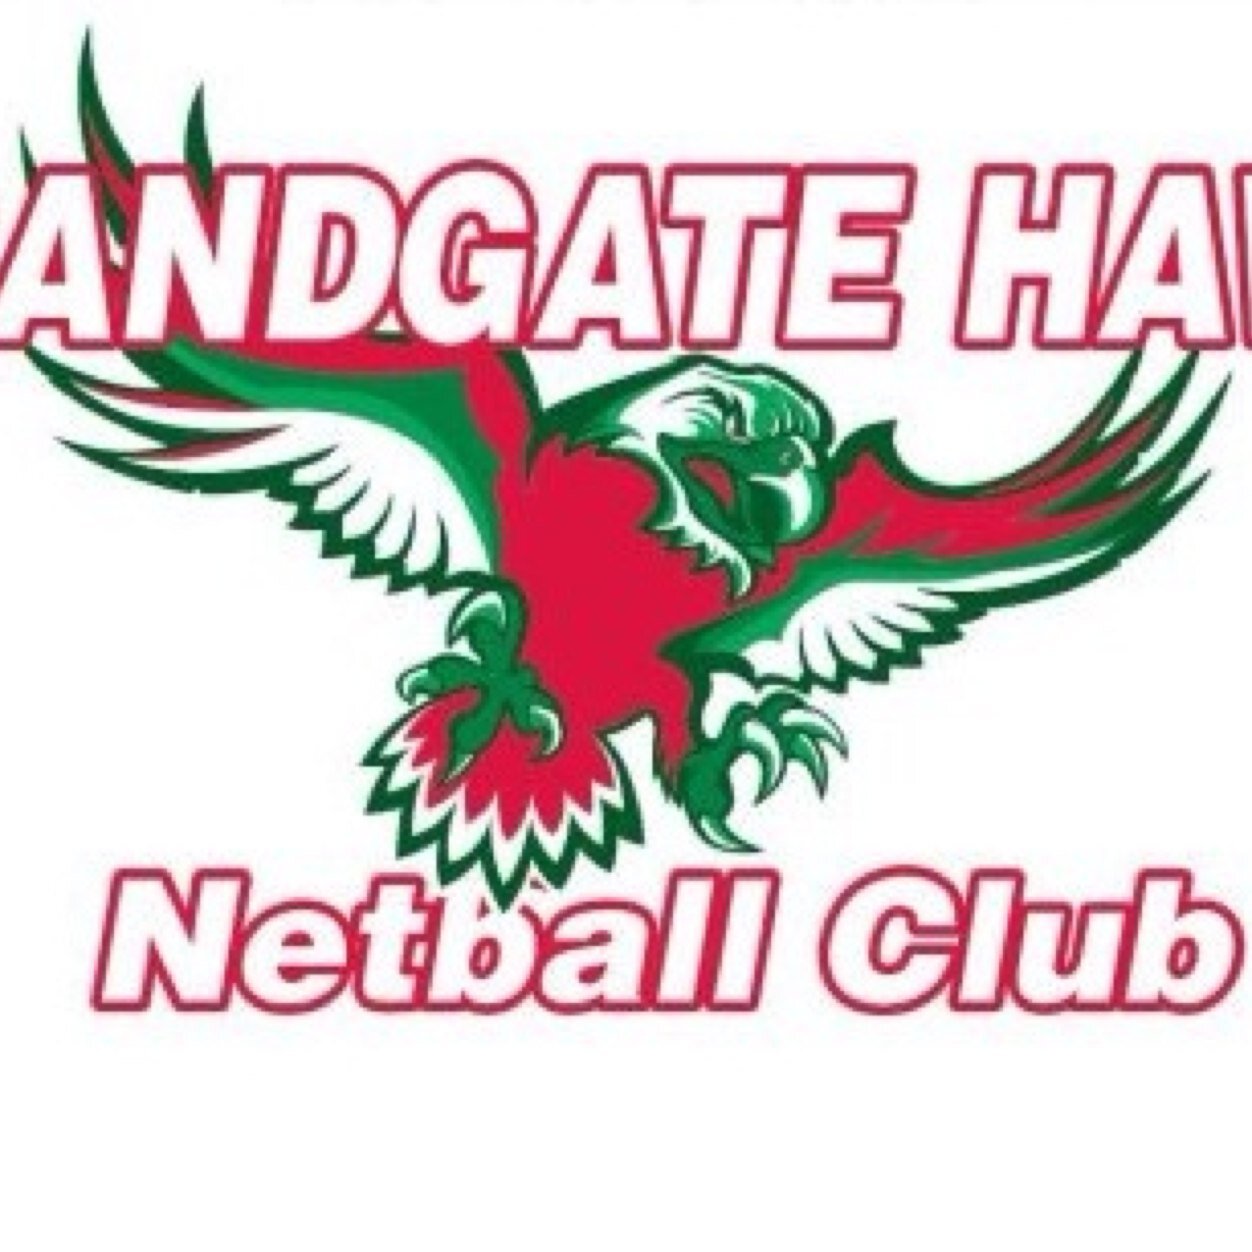 The official Sandgate Hawks Netball Club Twitter account. 

https://t.co/xK1kHG8BZ0